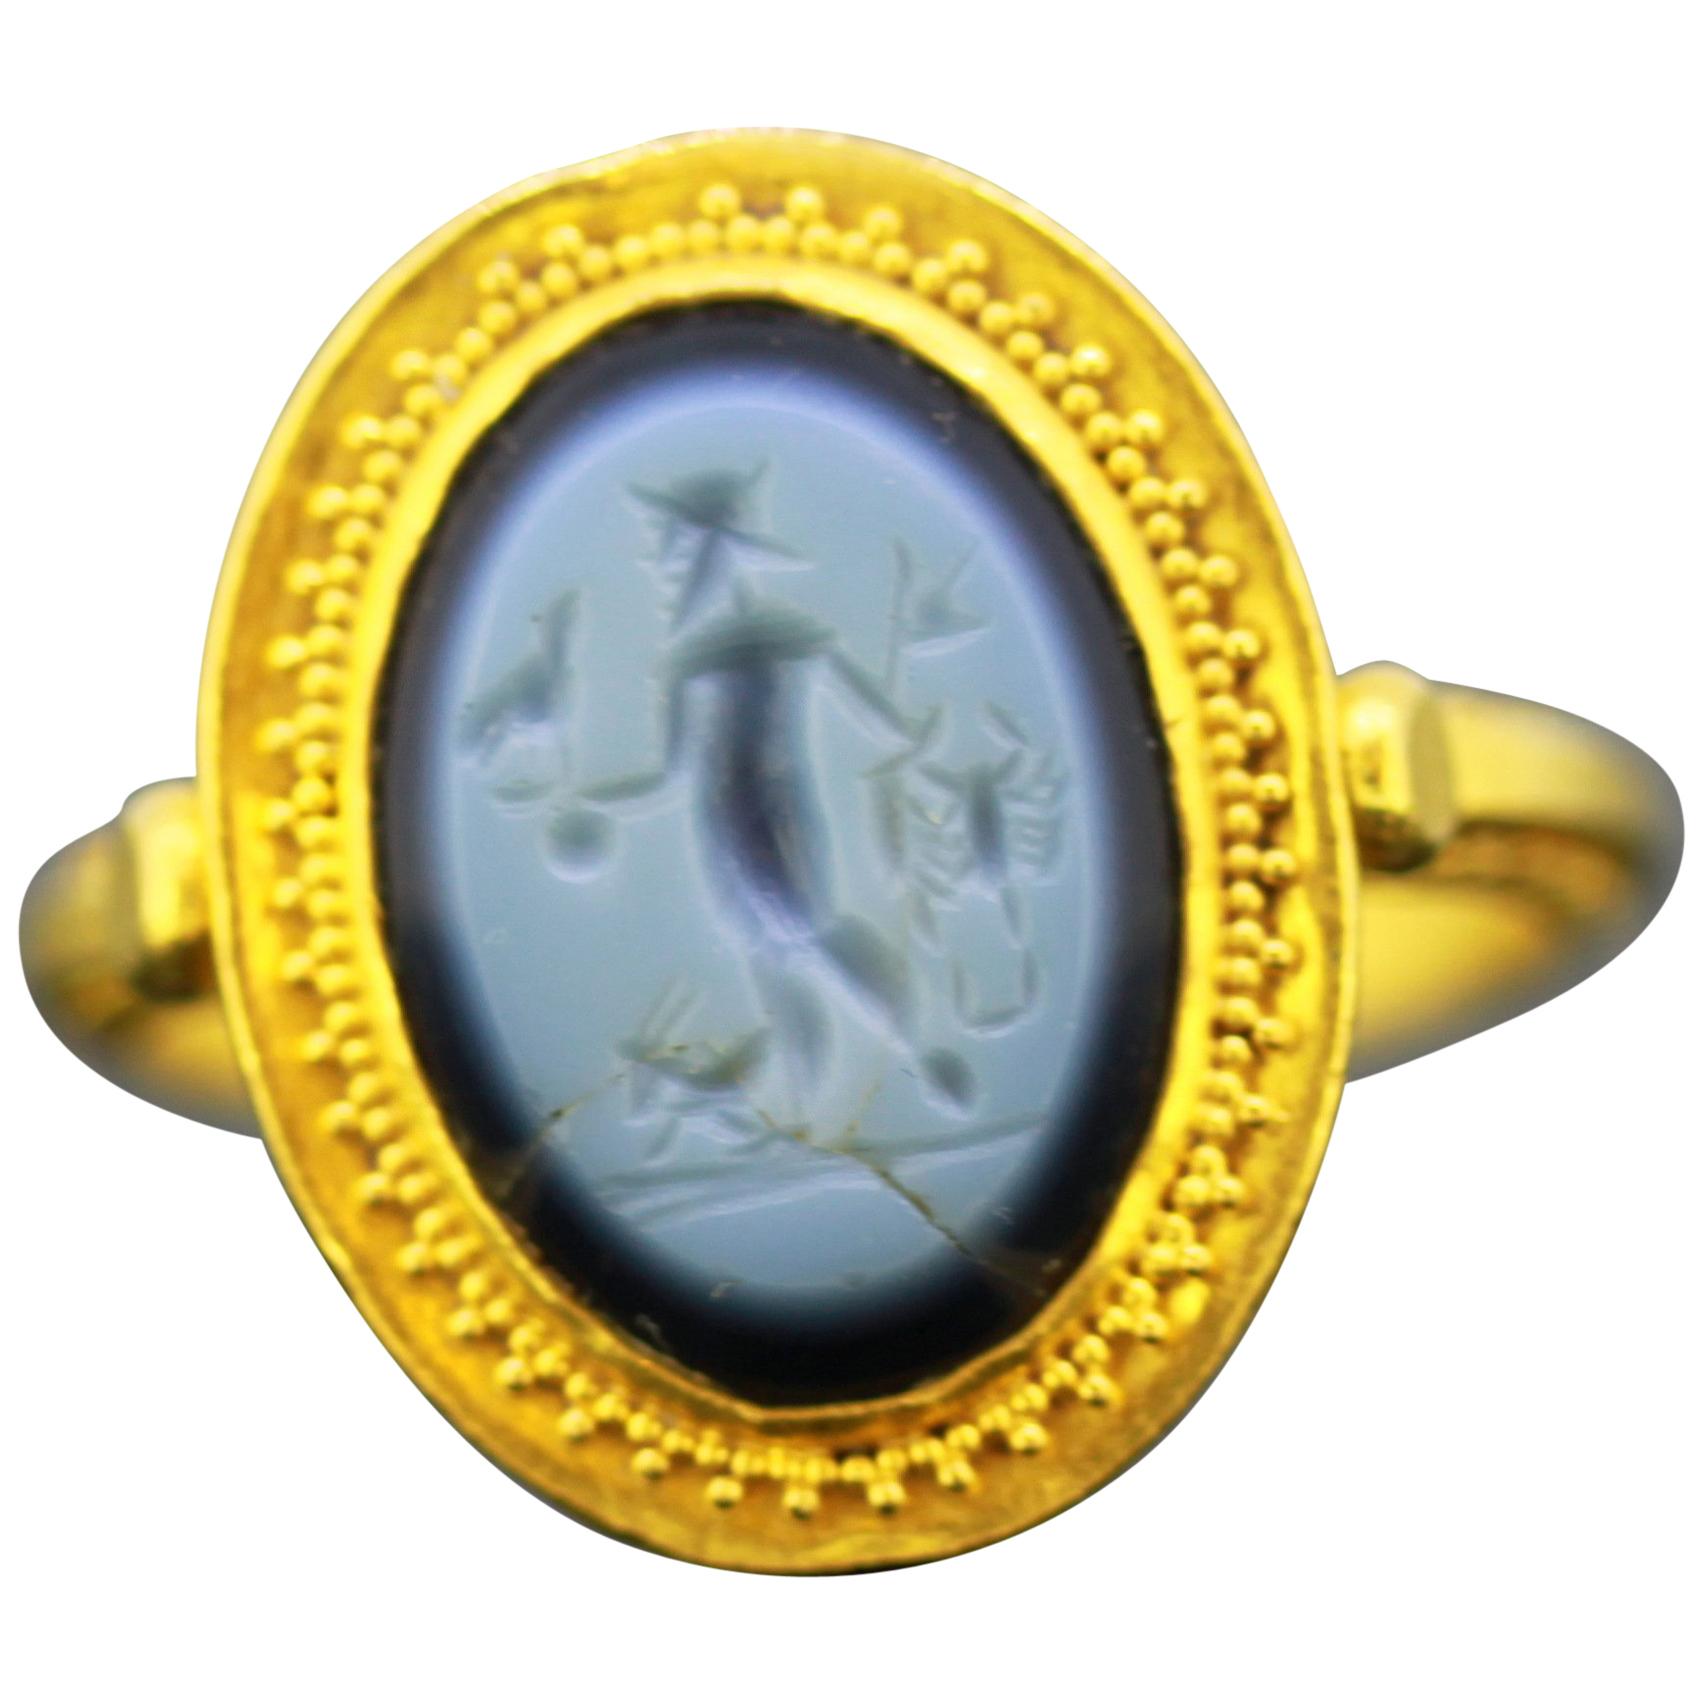 Ancient Roman Gold Ring with Nicolo Intaglio of Venatores, 1st-3rd Century Ad